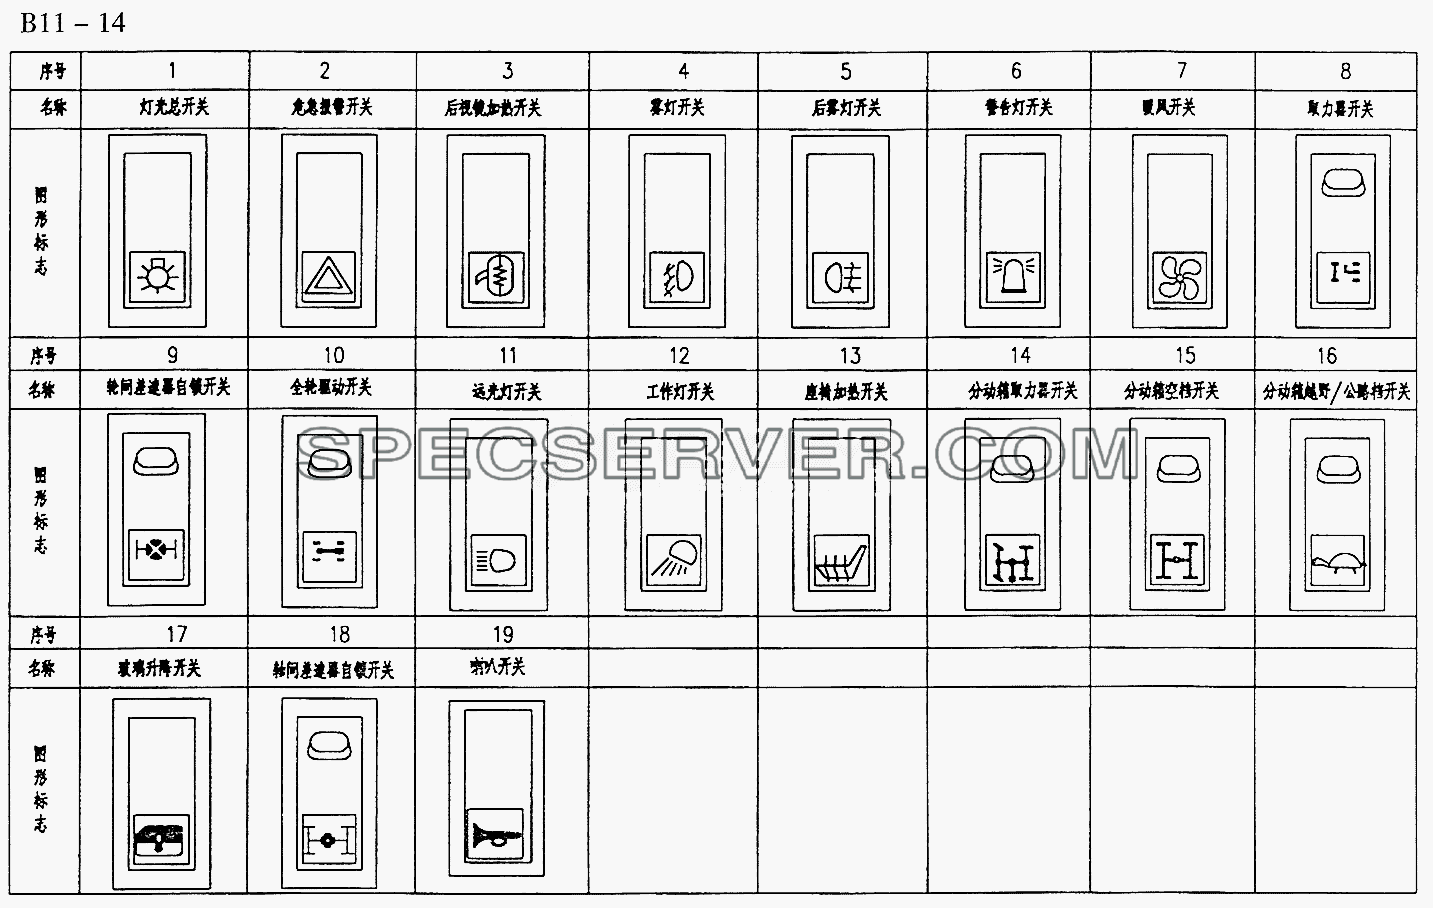 SWITCHS FOR 7001 TYPE ELECTRICAL SYSTEM (B11-14) для Sinotruk 6x6 Tipper (336) (список запасных частей)